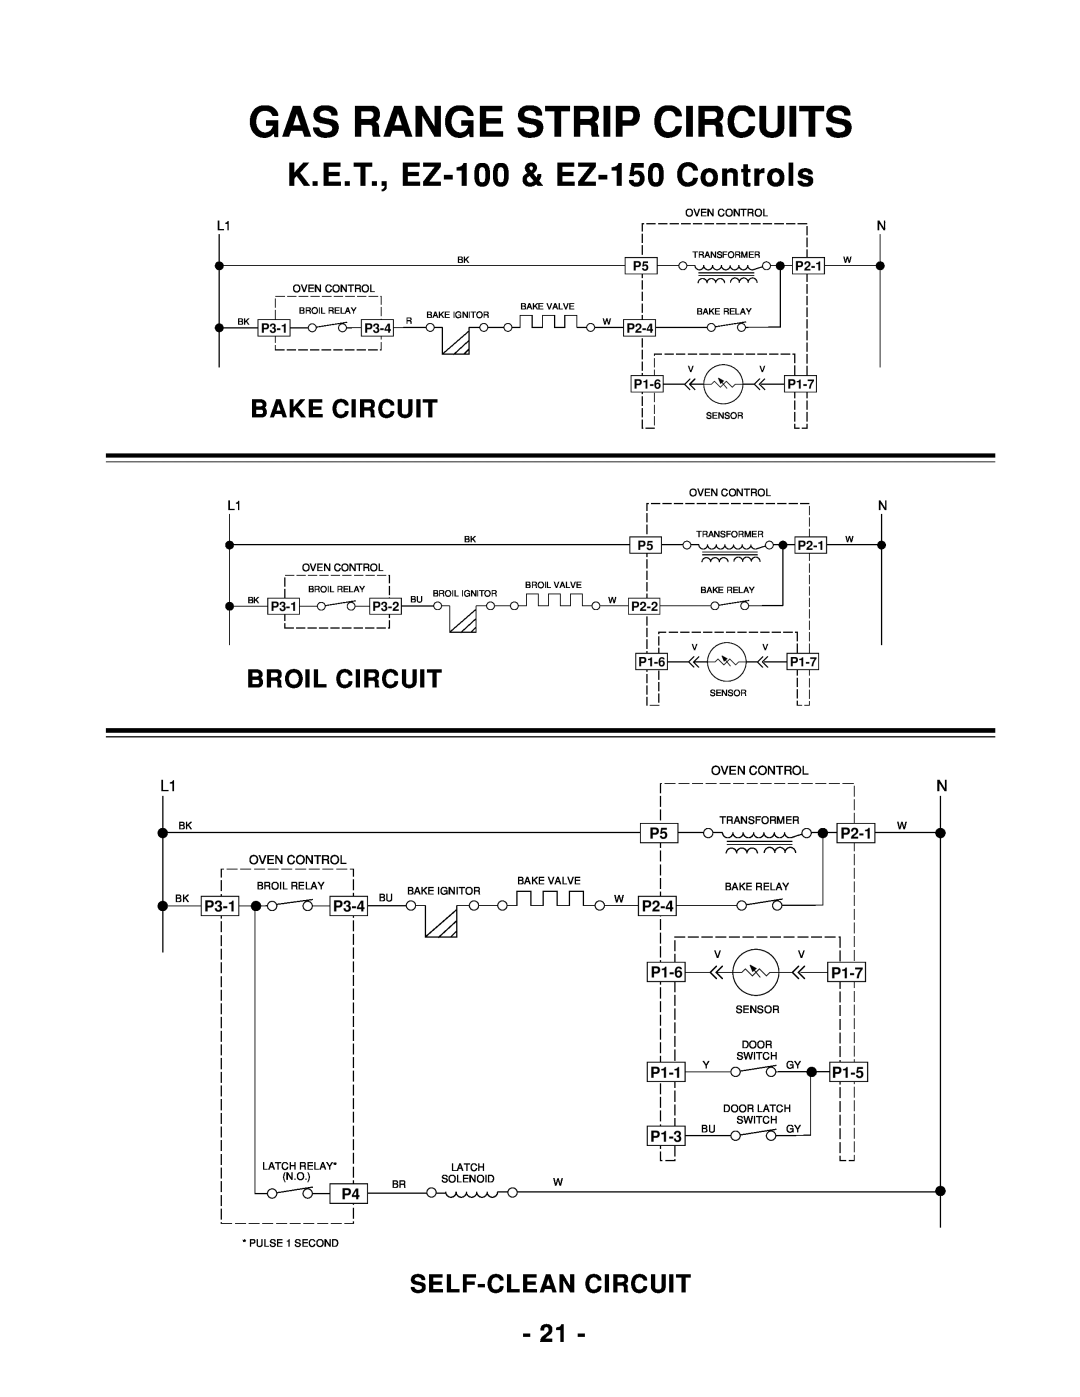 Whirlpool 465 Gas Range Strip Circuits, K.E.T., EZ-100 & EZ-150 Controls, P2-1, P3-1 P3-4, P2-4 P1-6 P1-1 P1-3, P1-7 P1-5 